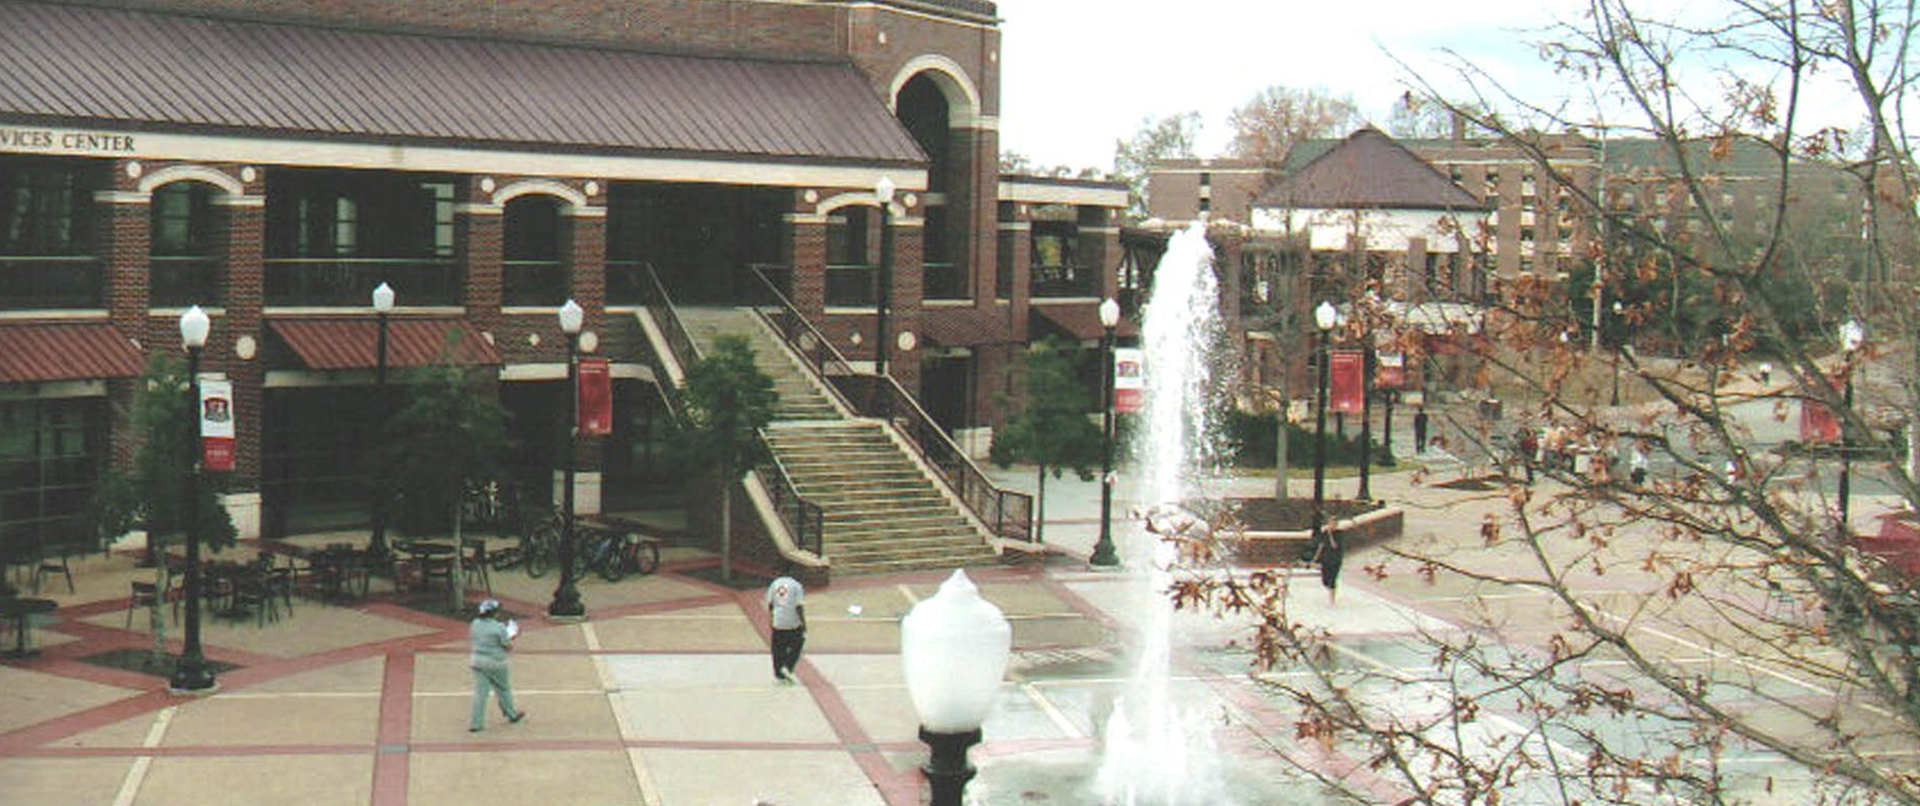 Outdoor University Plaza